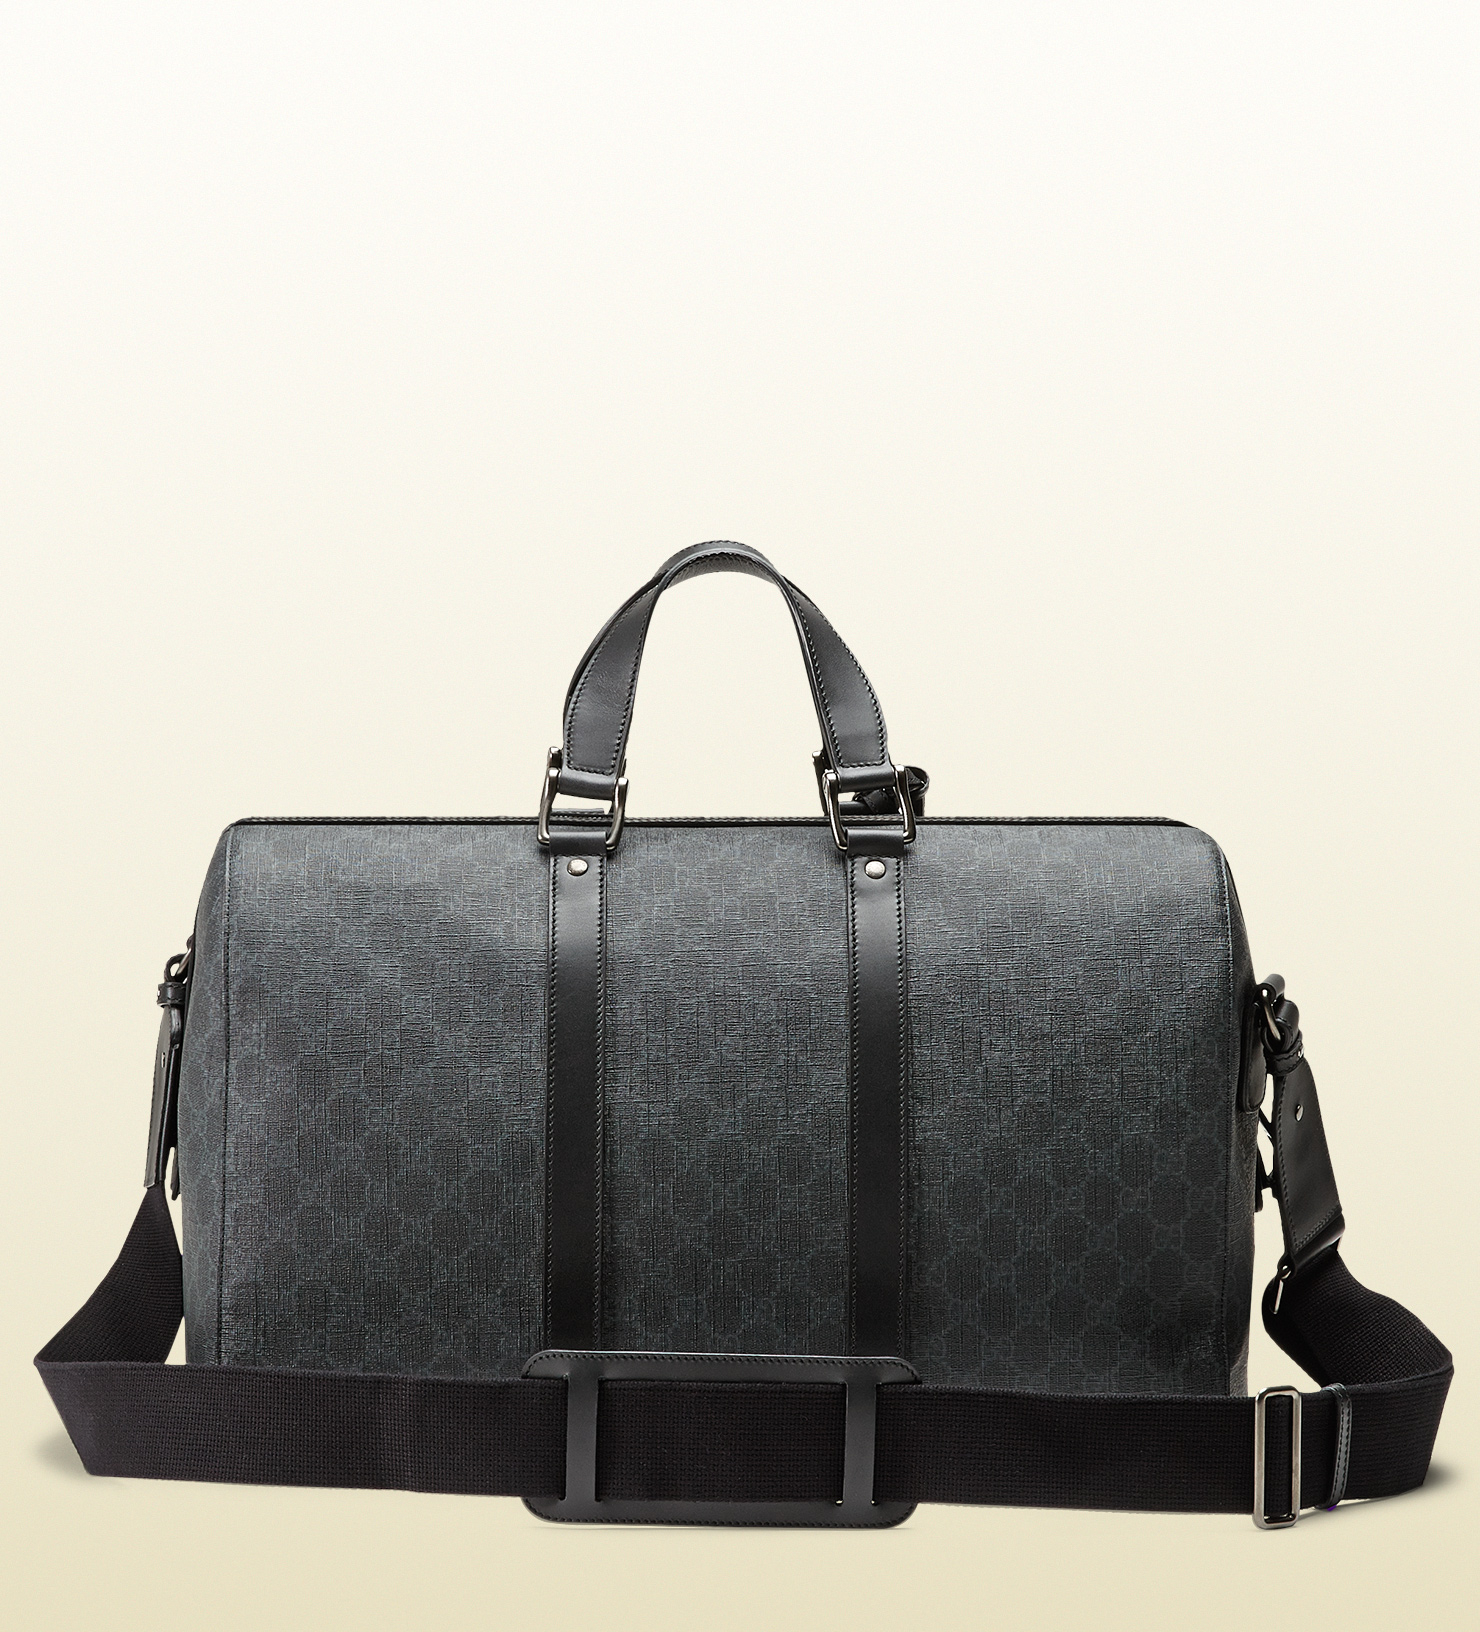 GG Supreme duffle - Gucci Men's Duffle Bags 406380KHN7N9772